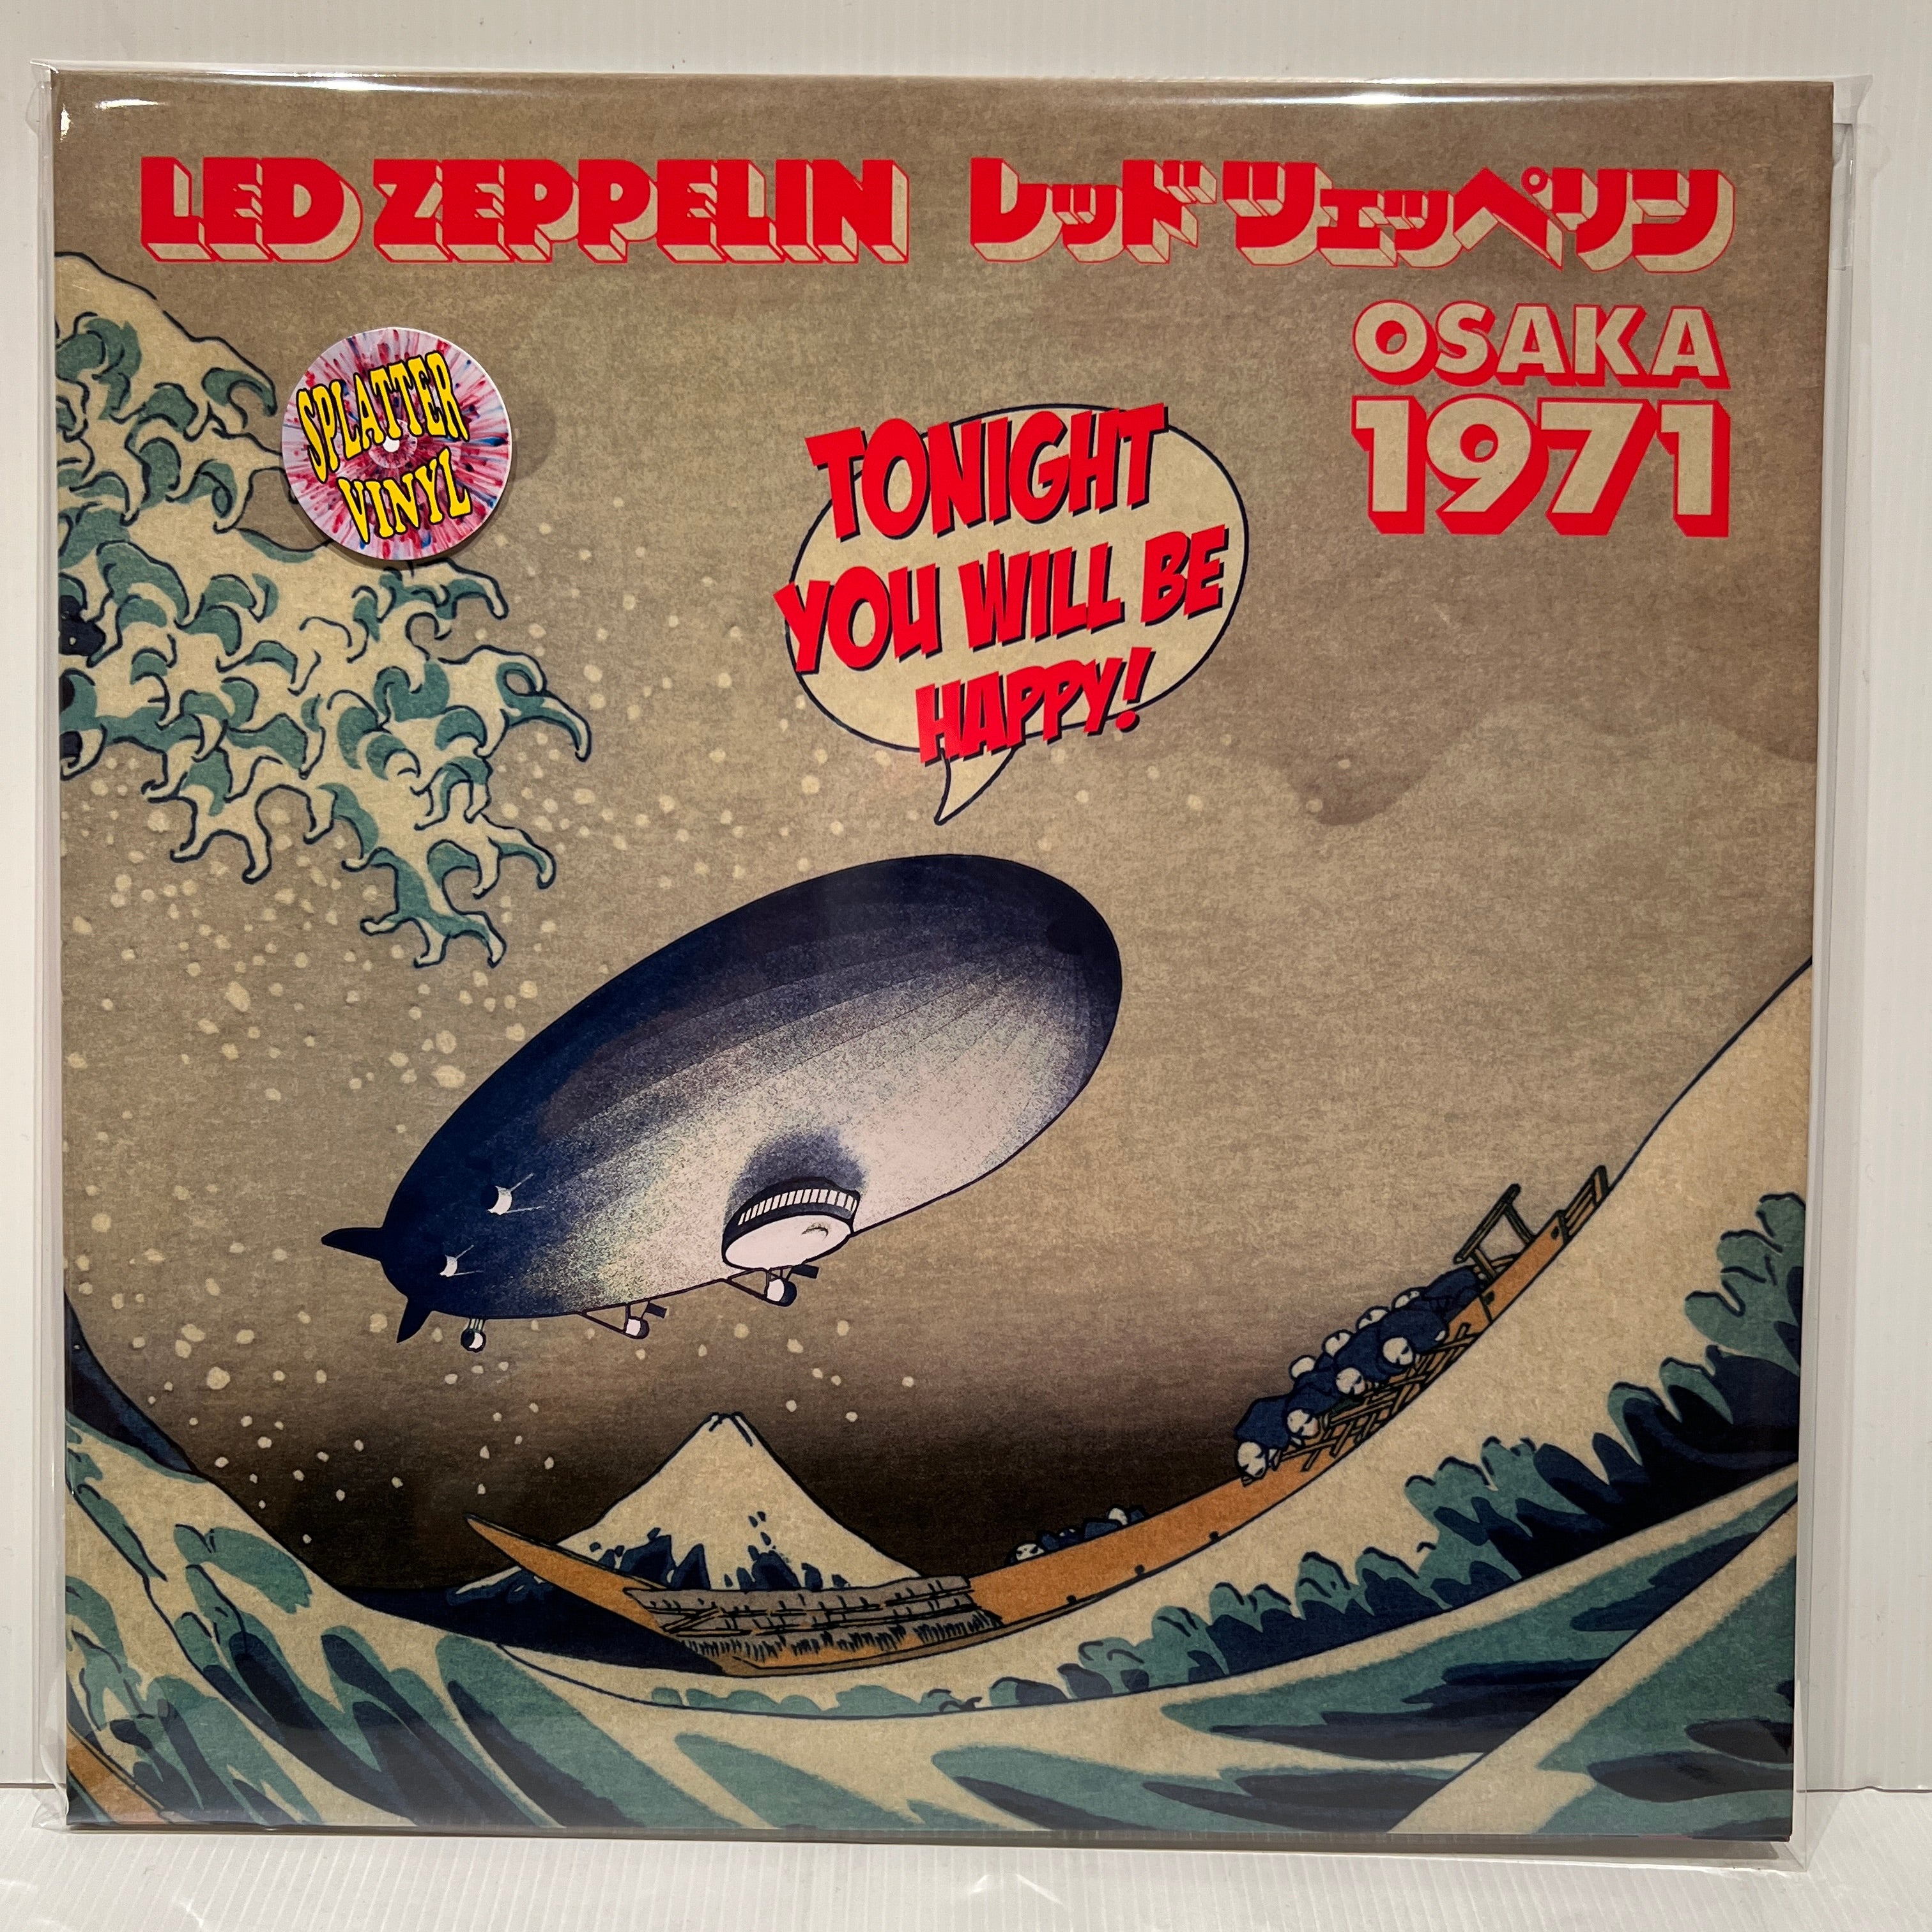 Led Zeppelin - Tonight You will be Happy ! - Rare Splatter vinyl 2LP